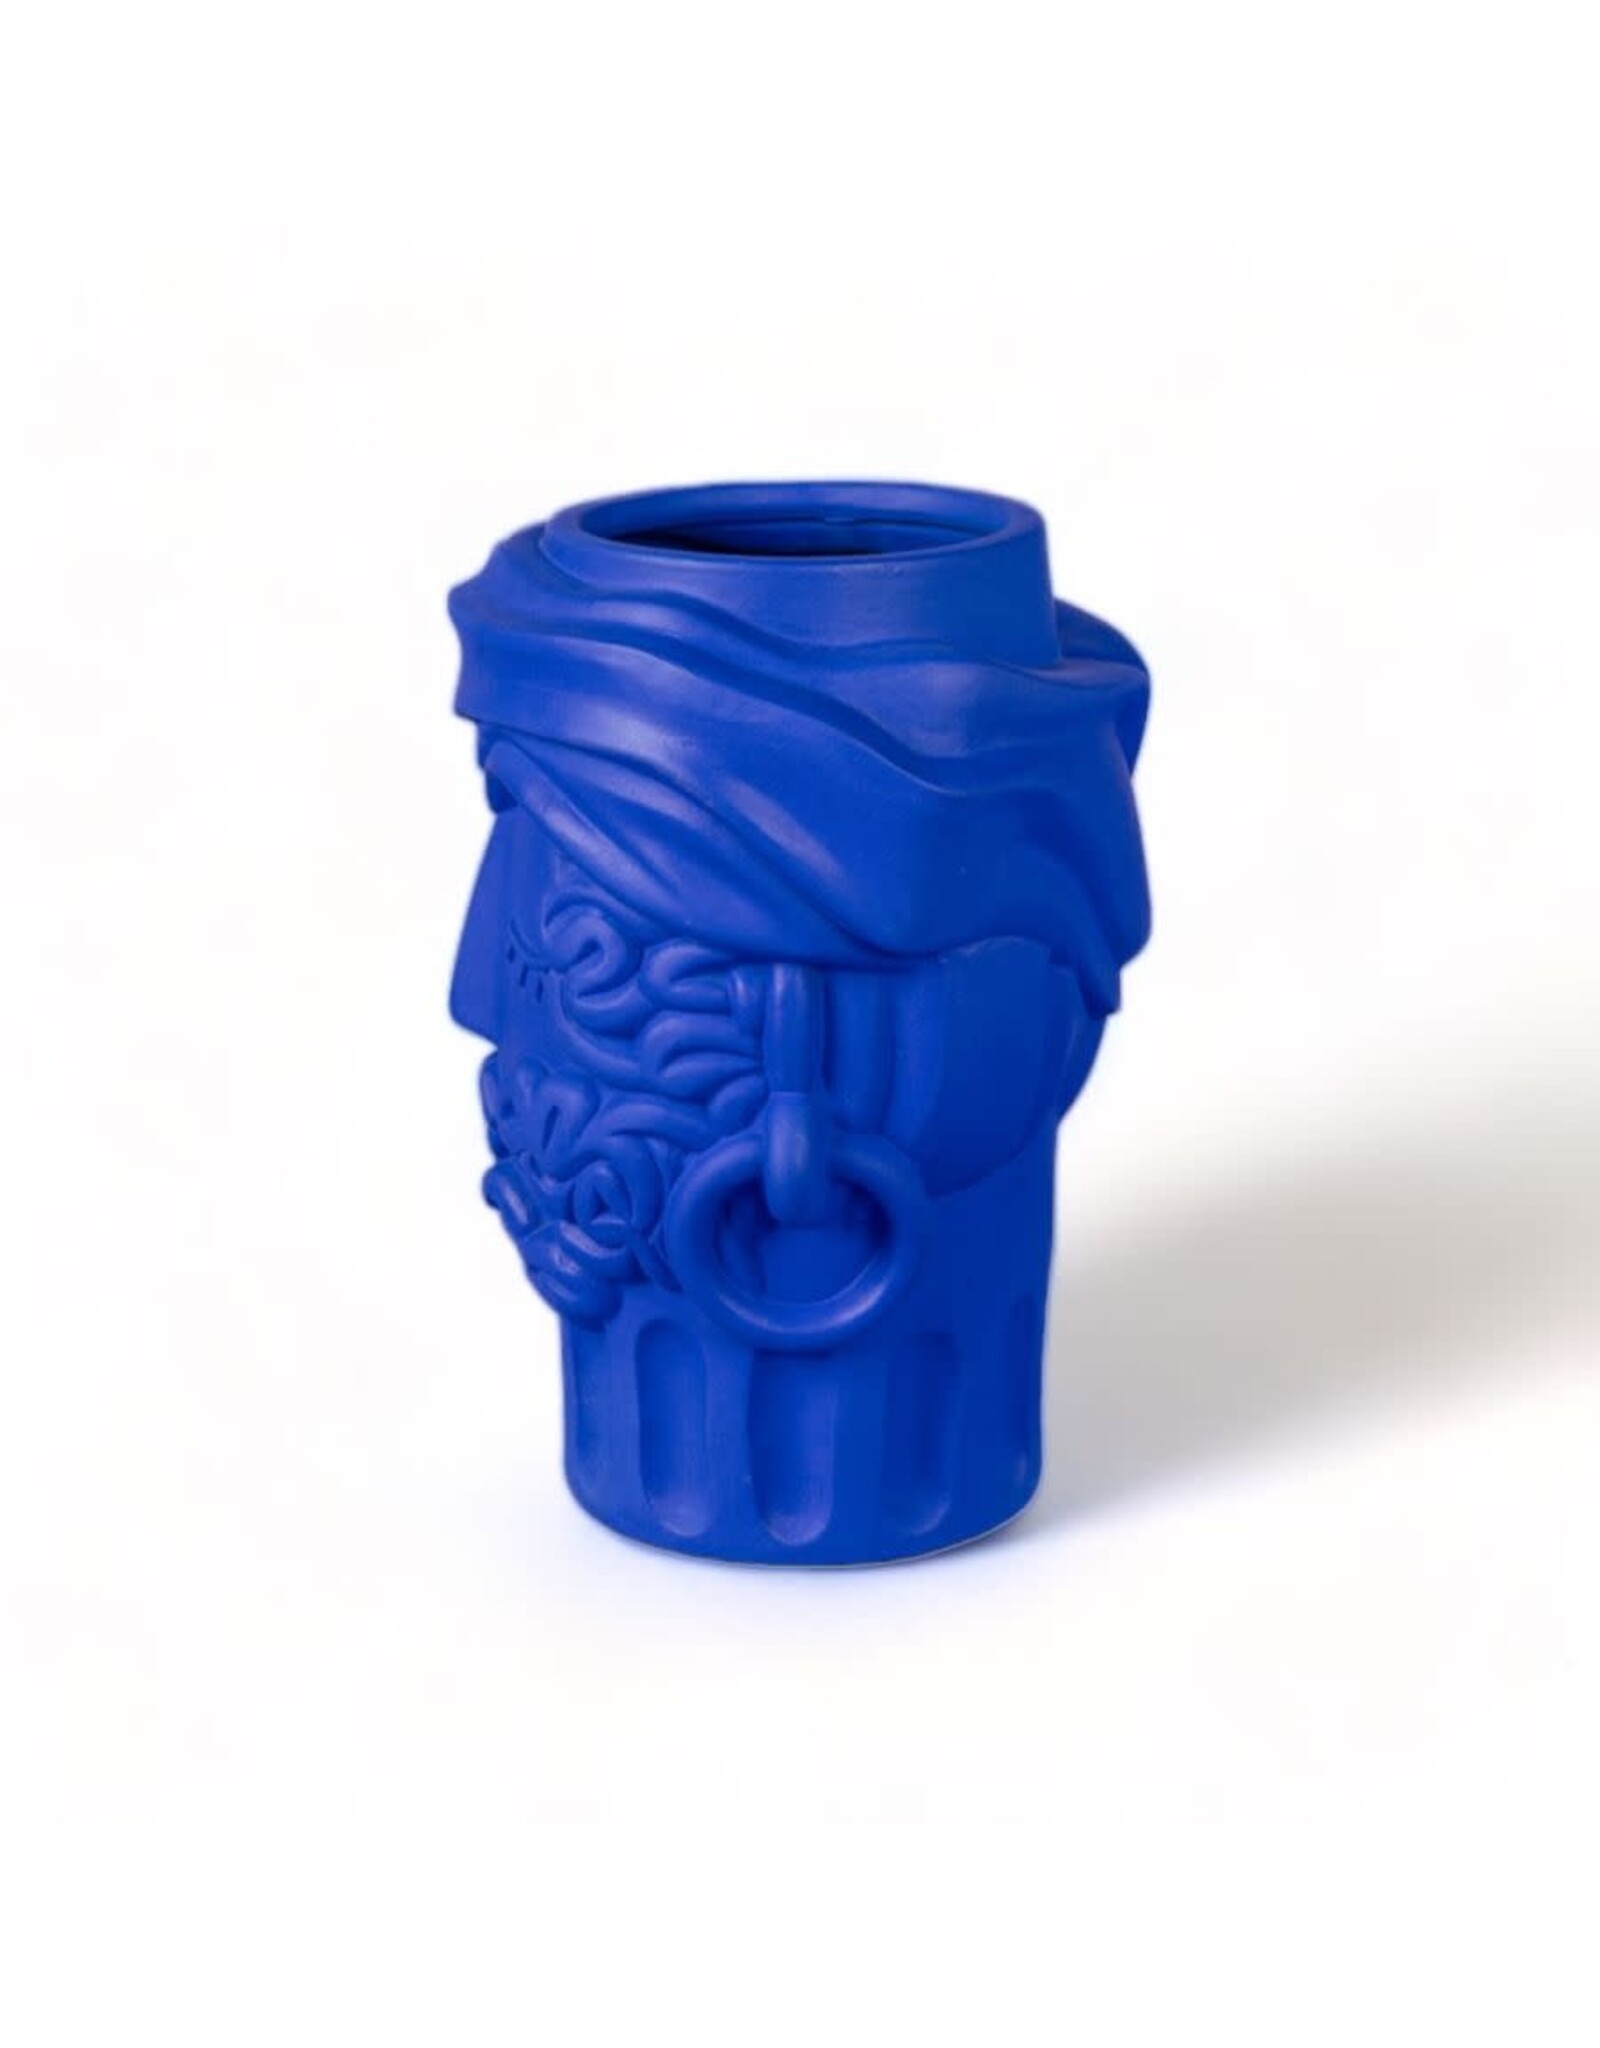 Seletti Terracotta Vase Man Blue